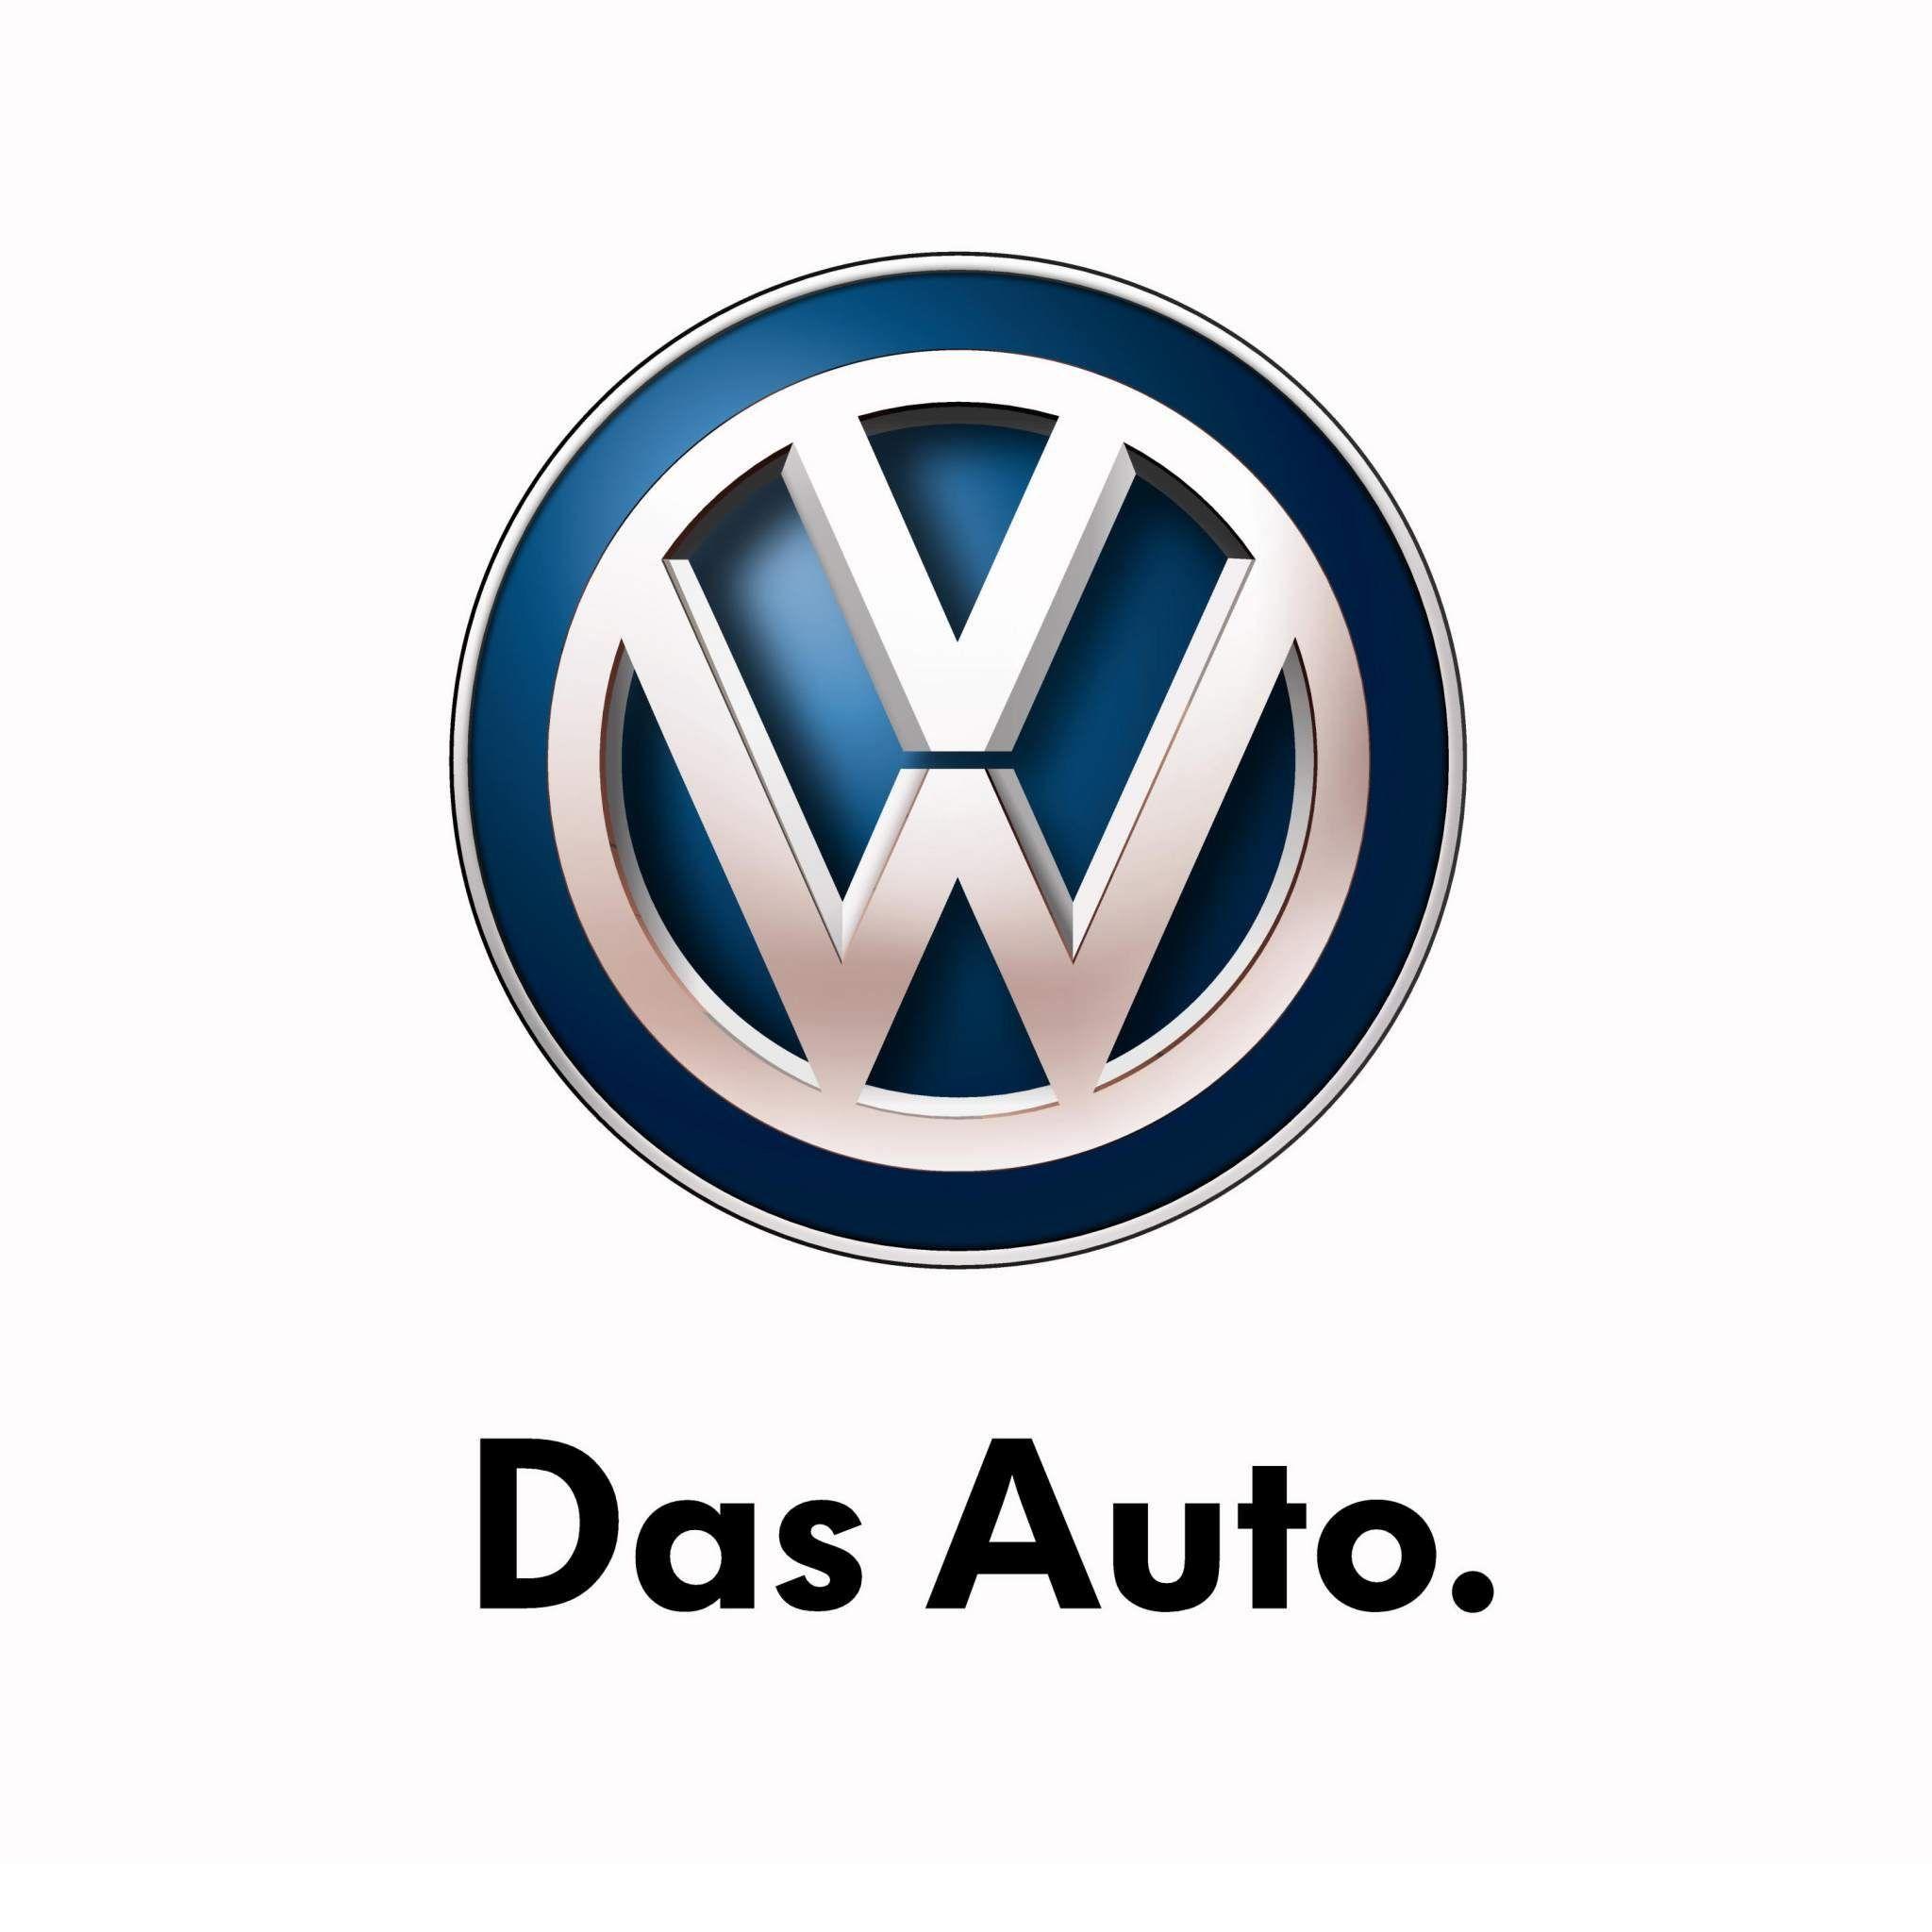 Passat Logo - VW Passat Commercial Uses 3D Printing - 3D Printing Industry